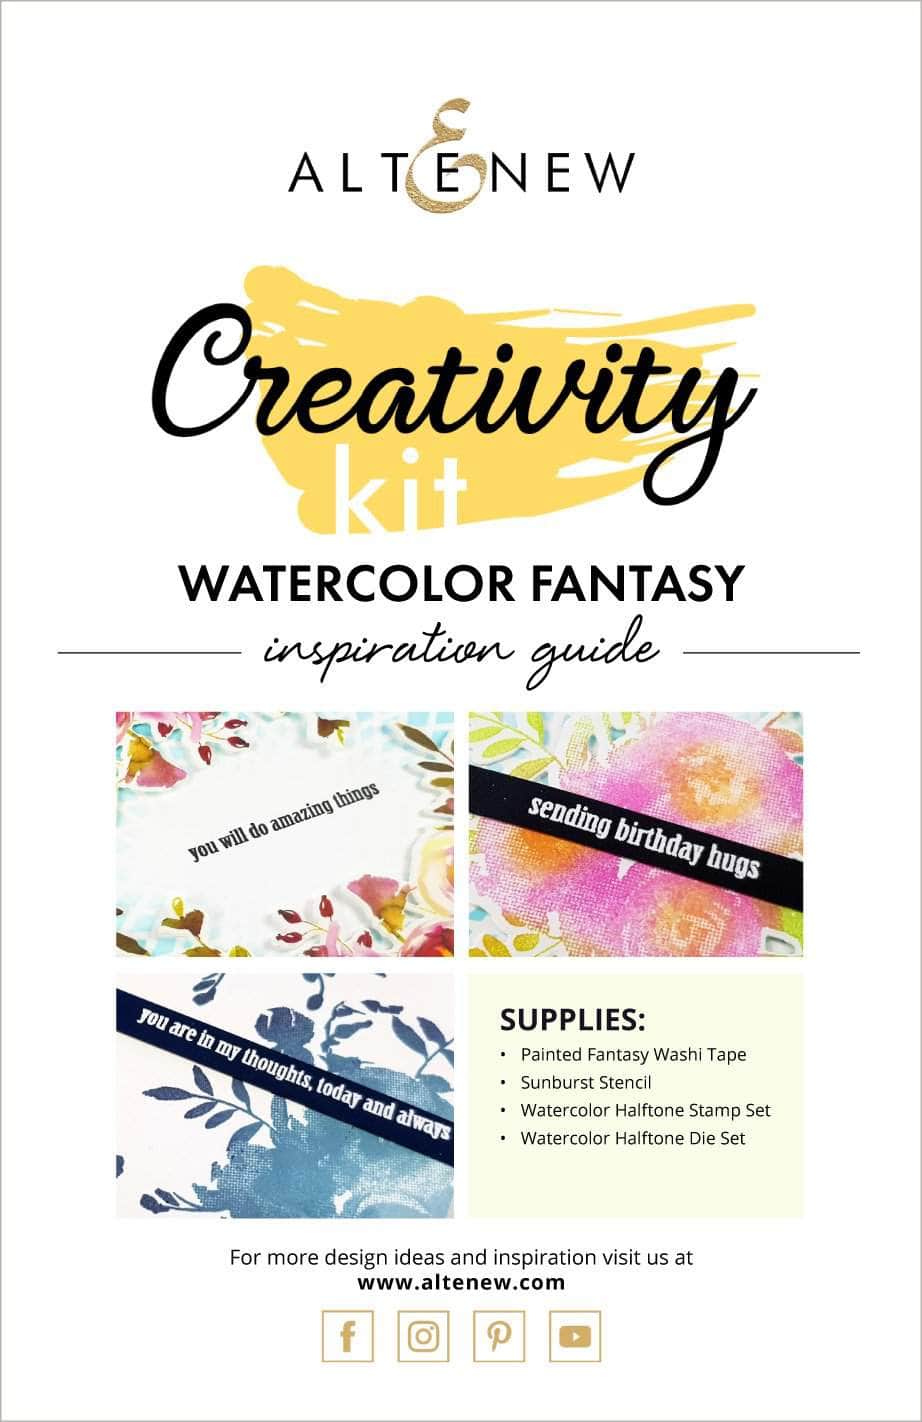 Printed Media Watercolor Fantasy Creativity Kit Inspiration Guide